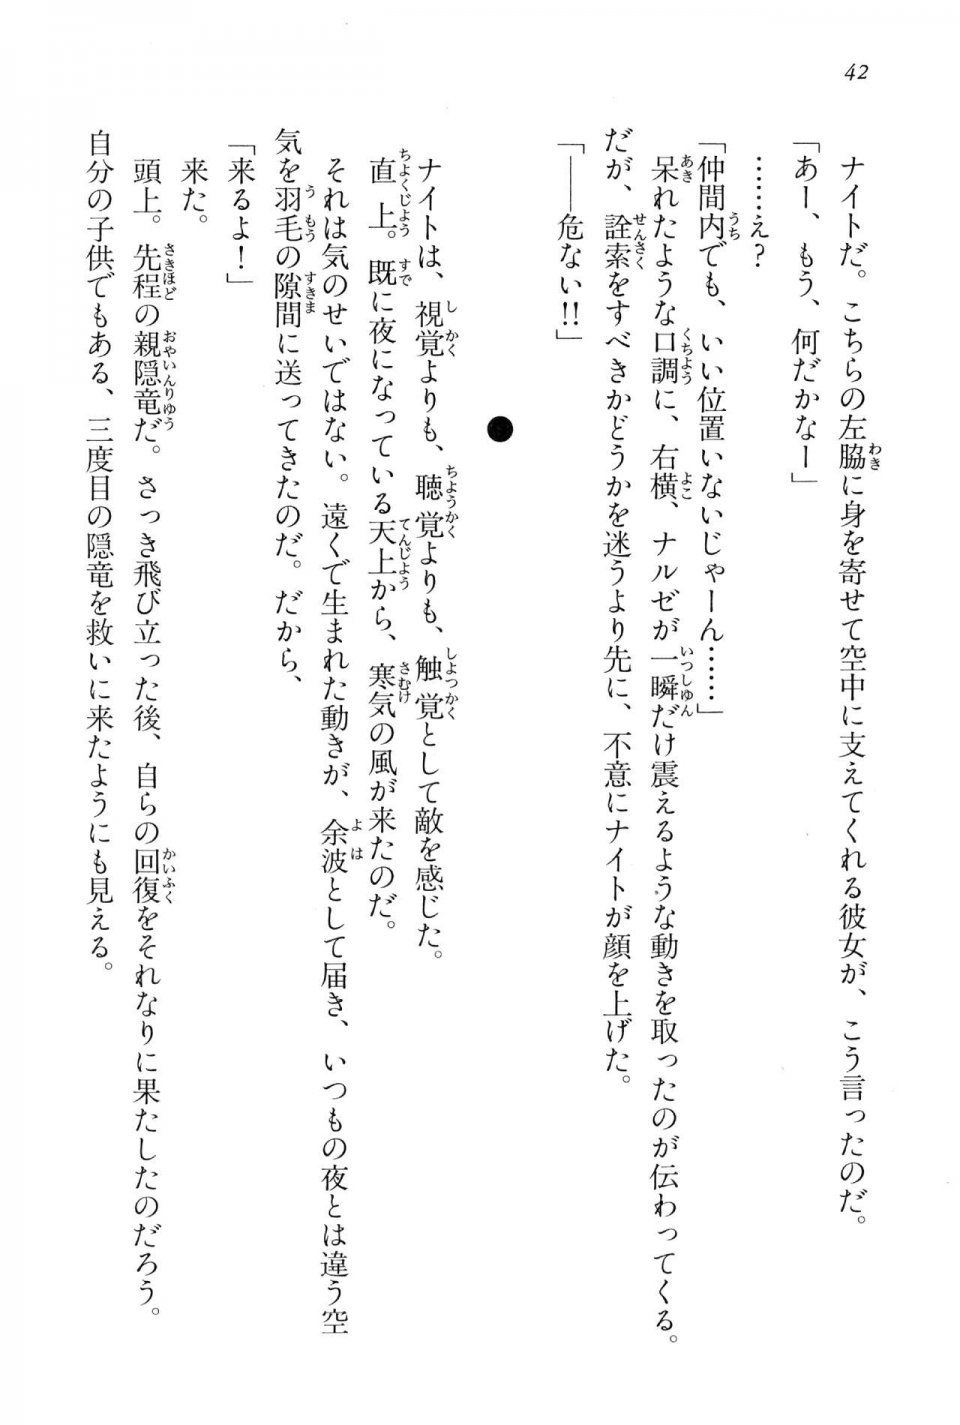 Kyoukai Senjou no Horizon BD Special Mininovel Vol 4(2B) - Photo #46